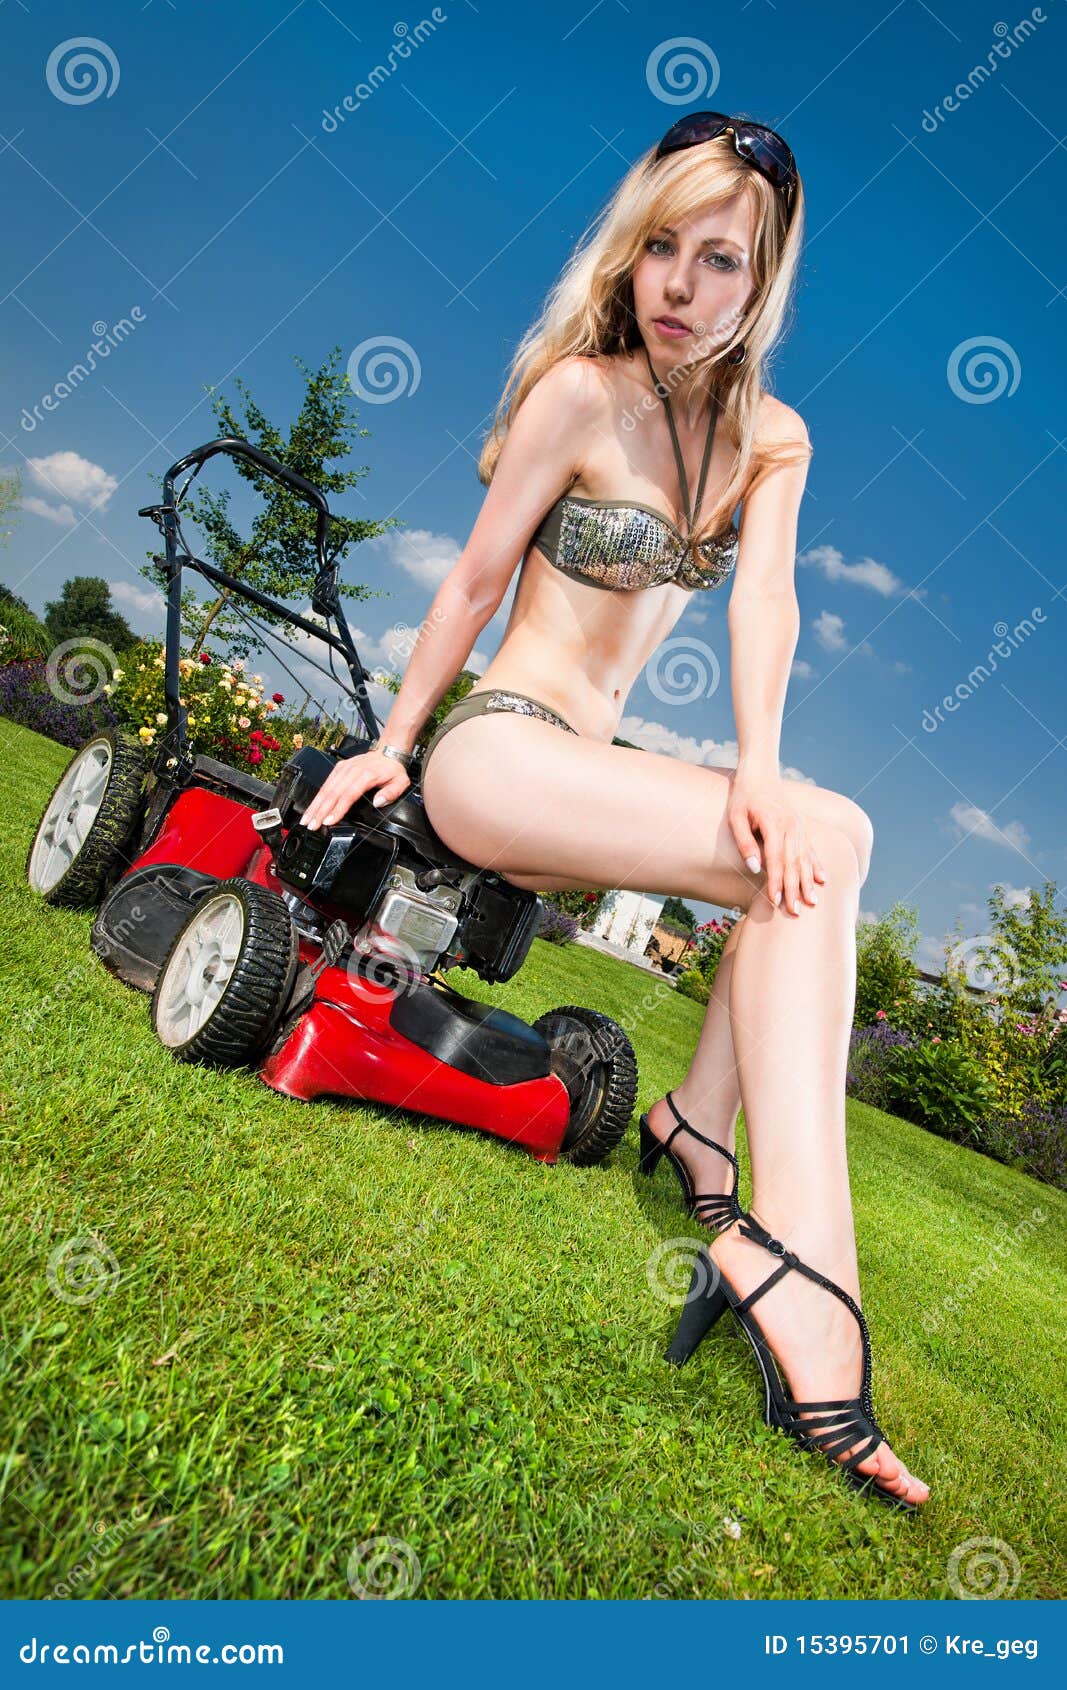 sexy-woman-lawn-mower-15395701.jpg